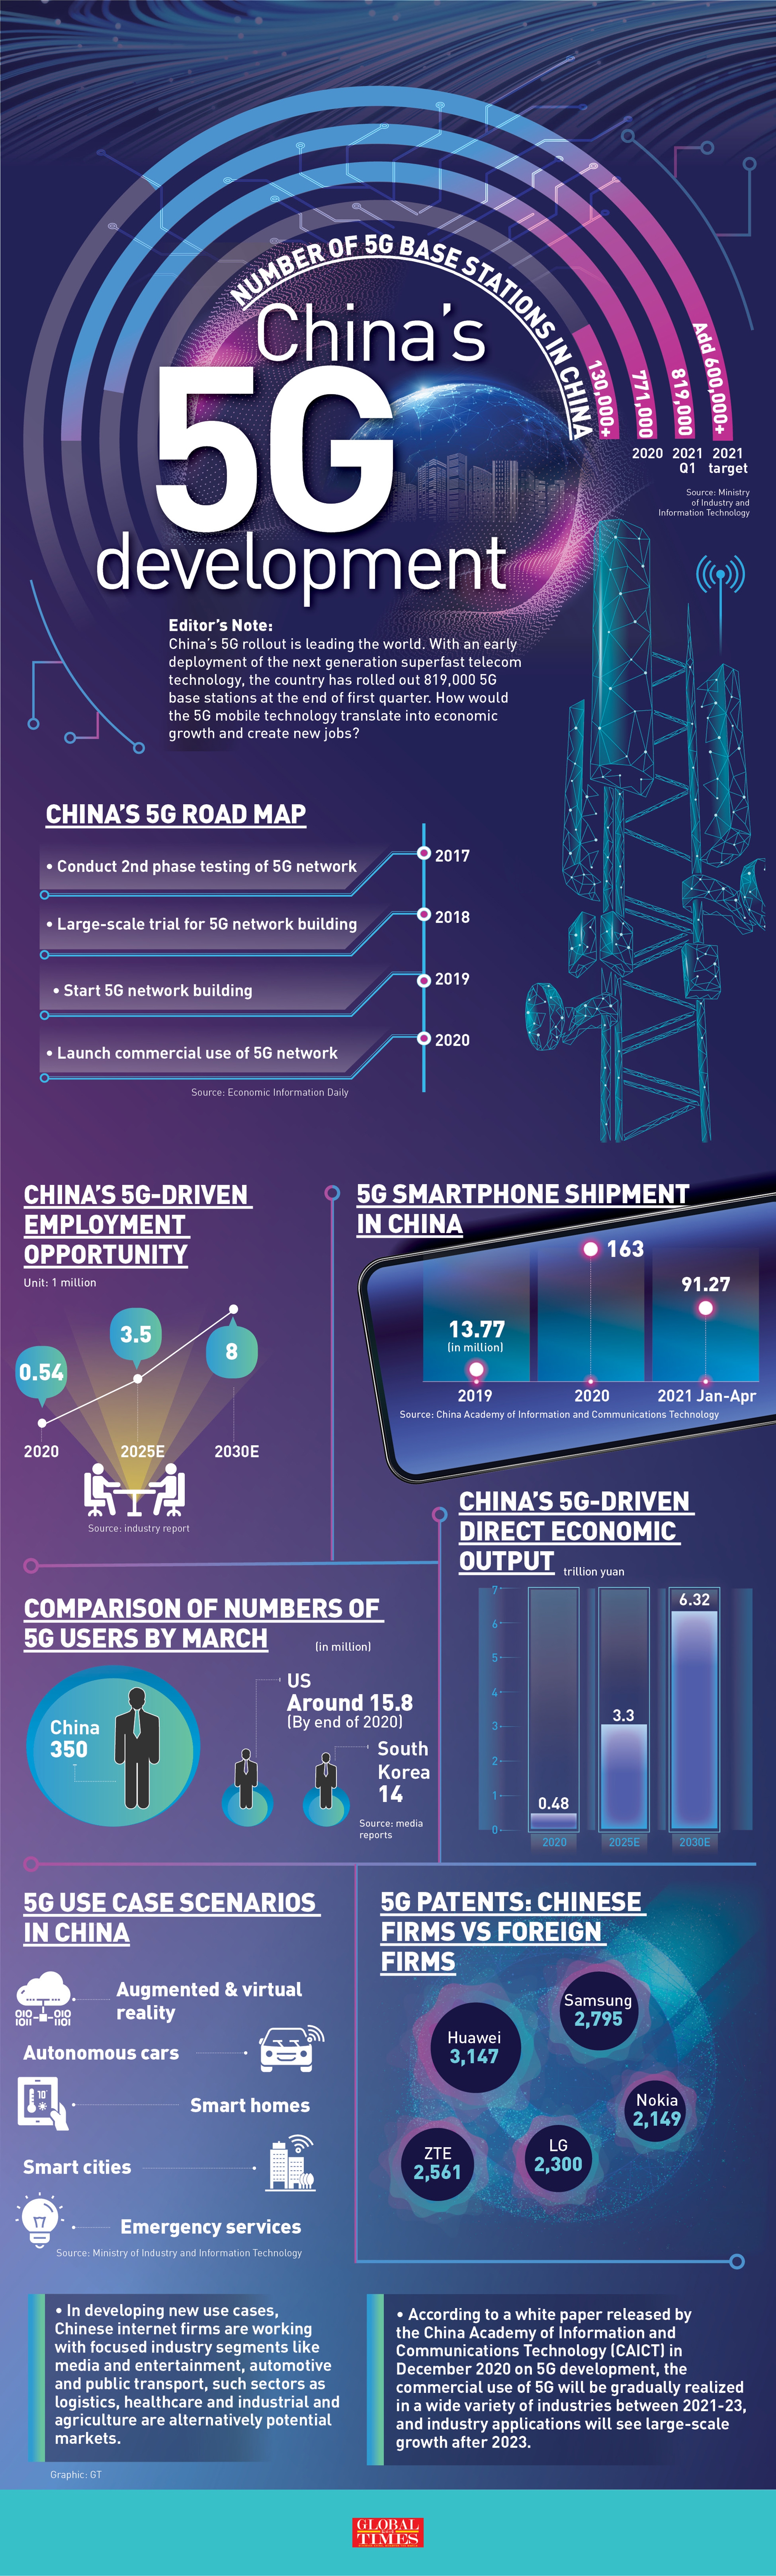 China's 5G development